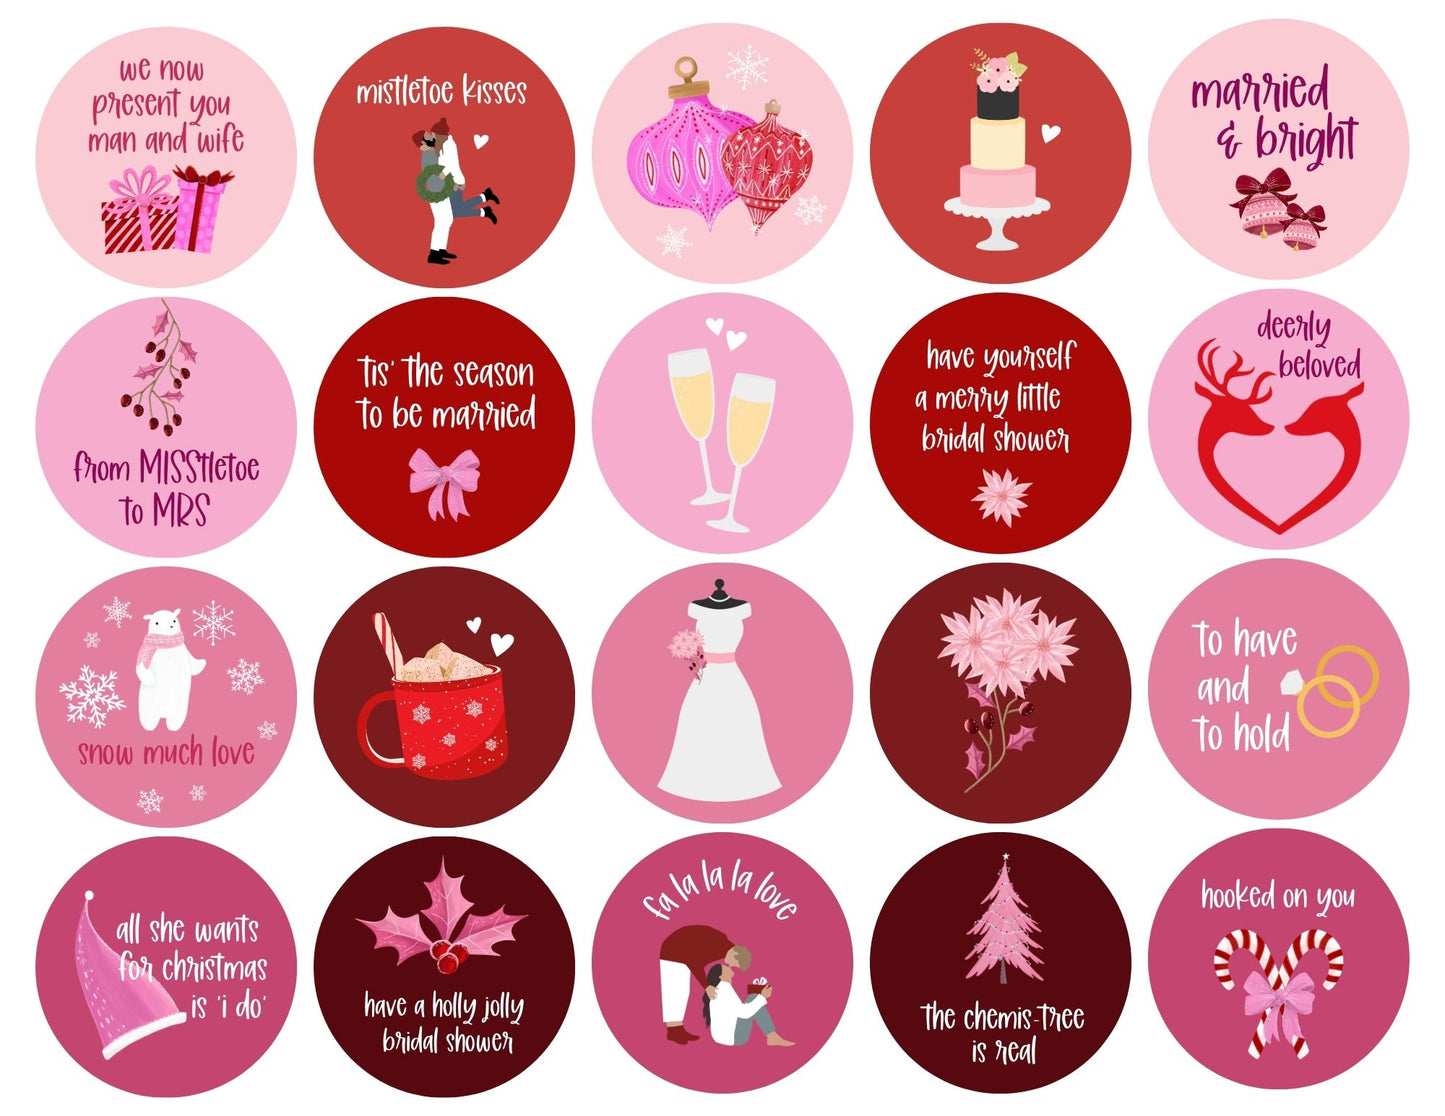 Pink Christmas Bridal Shower Cupcake Topper Printables